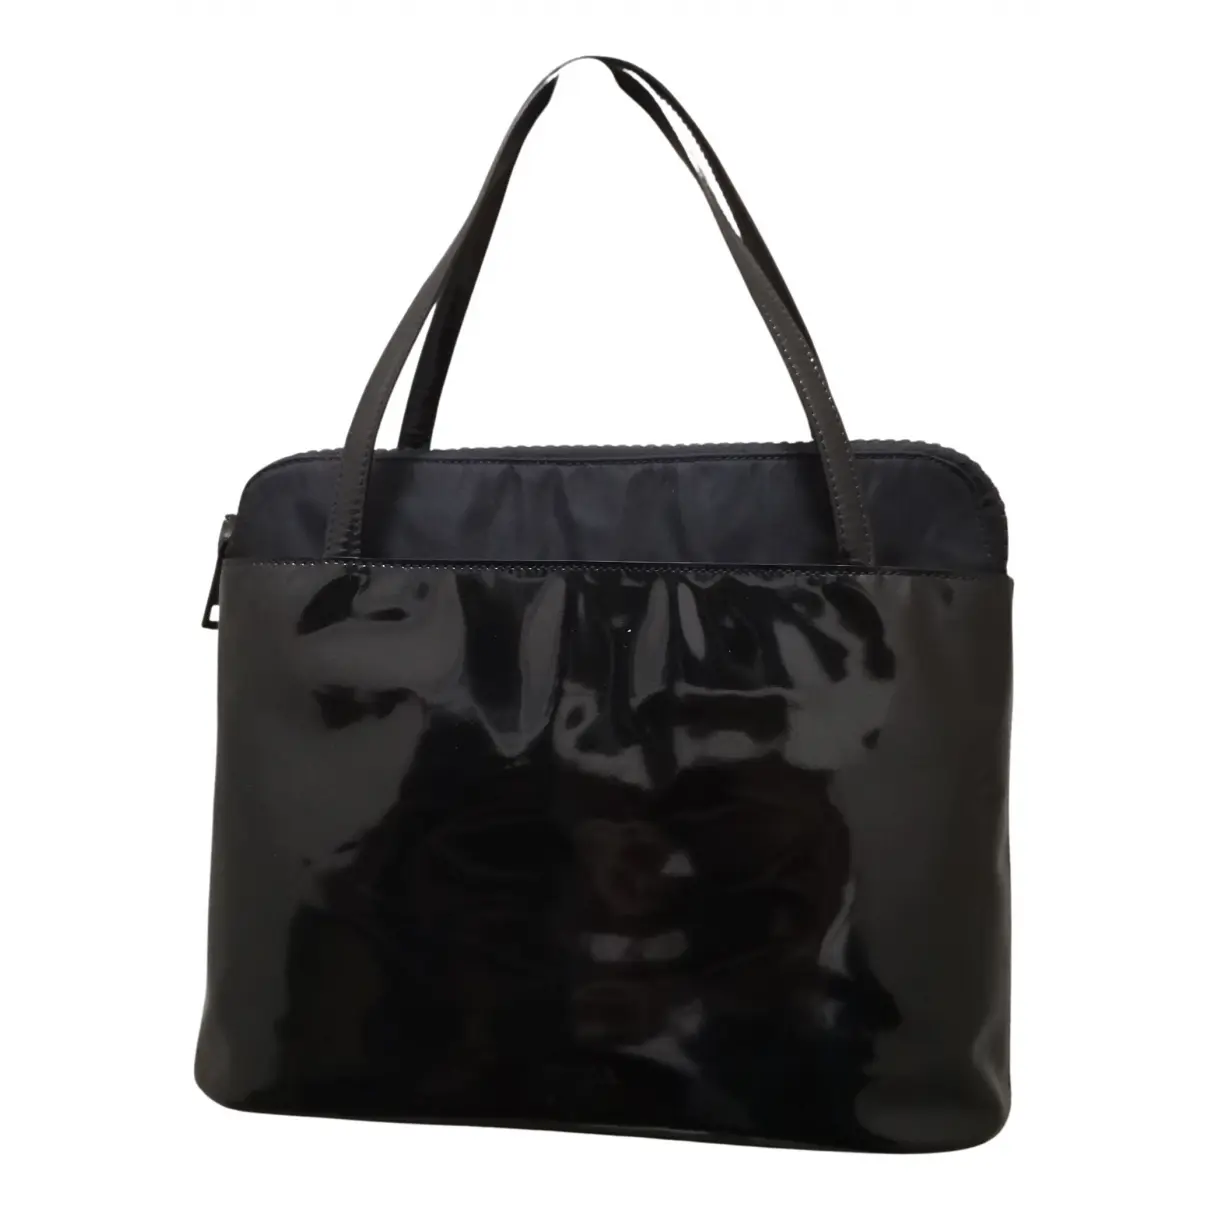 Patent leather handbag Prada